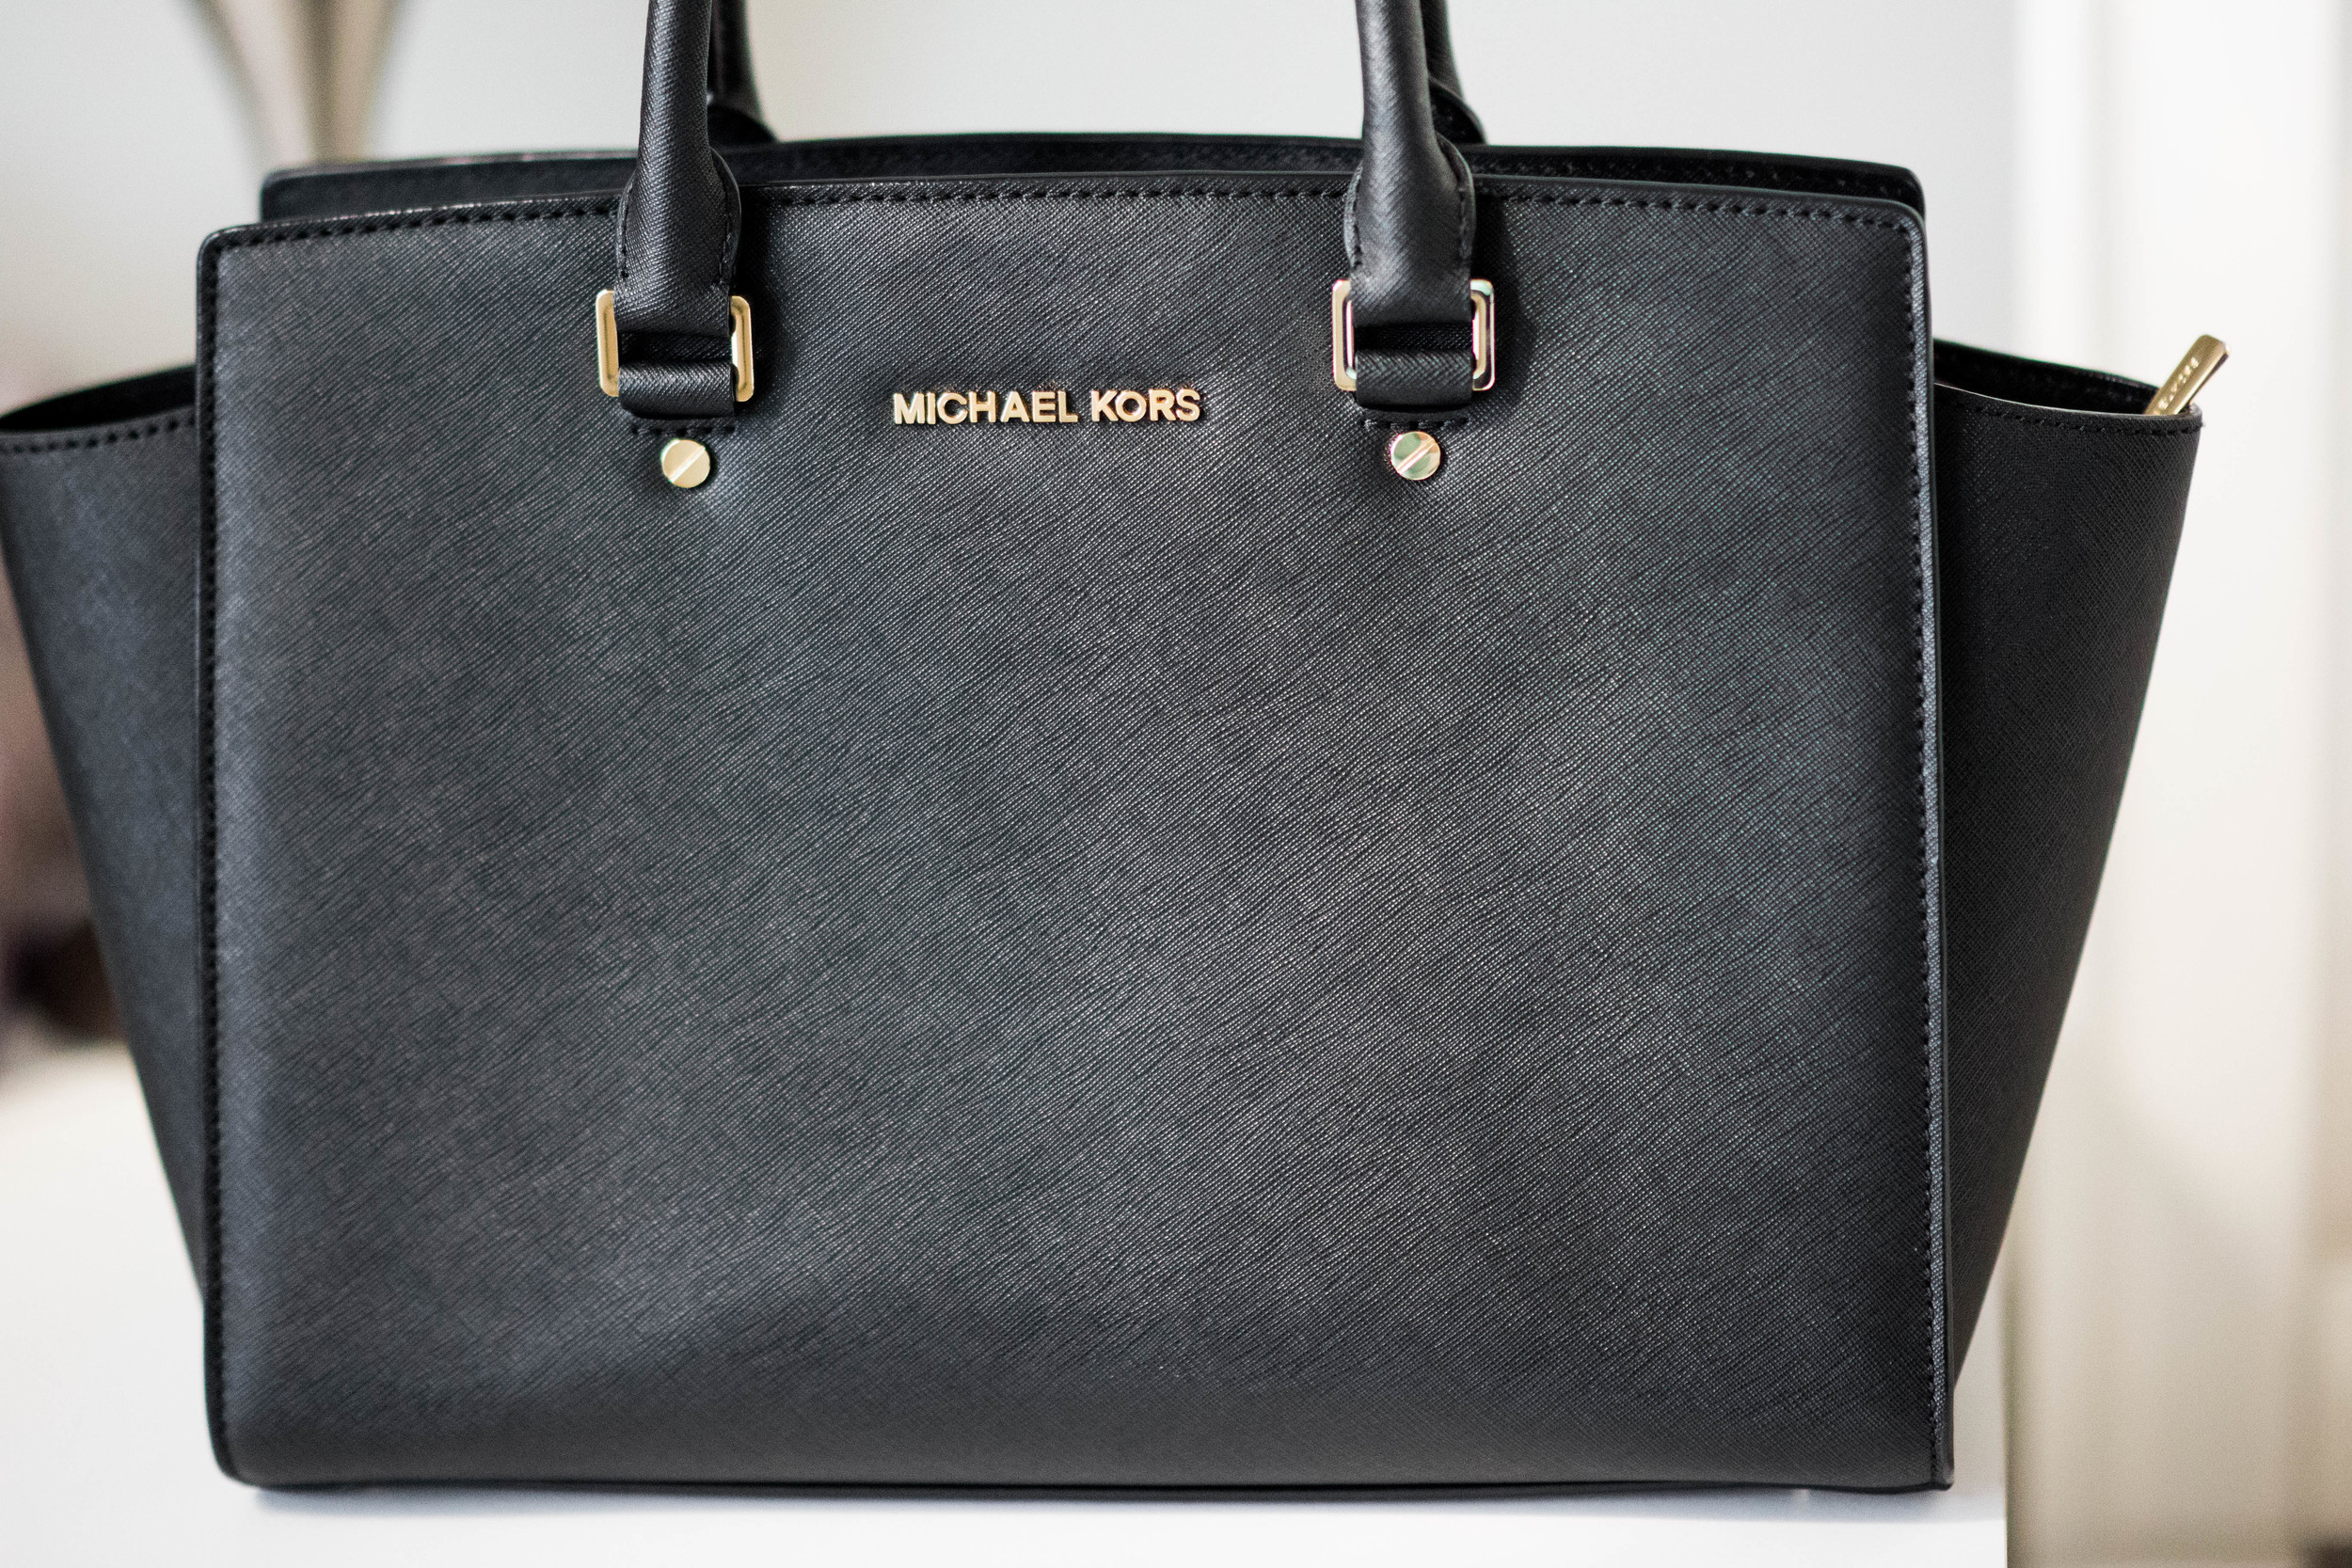 Michael Kors Colorblock Large Selma Satchel purse